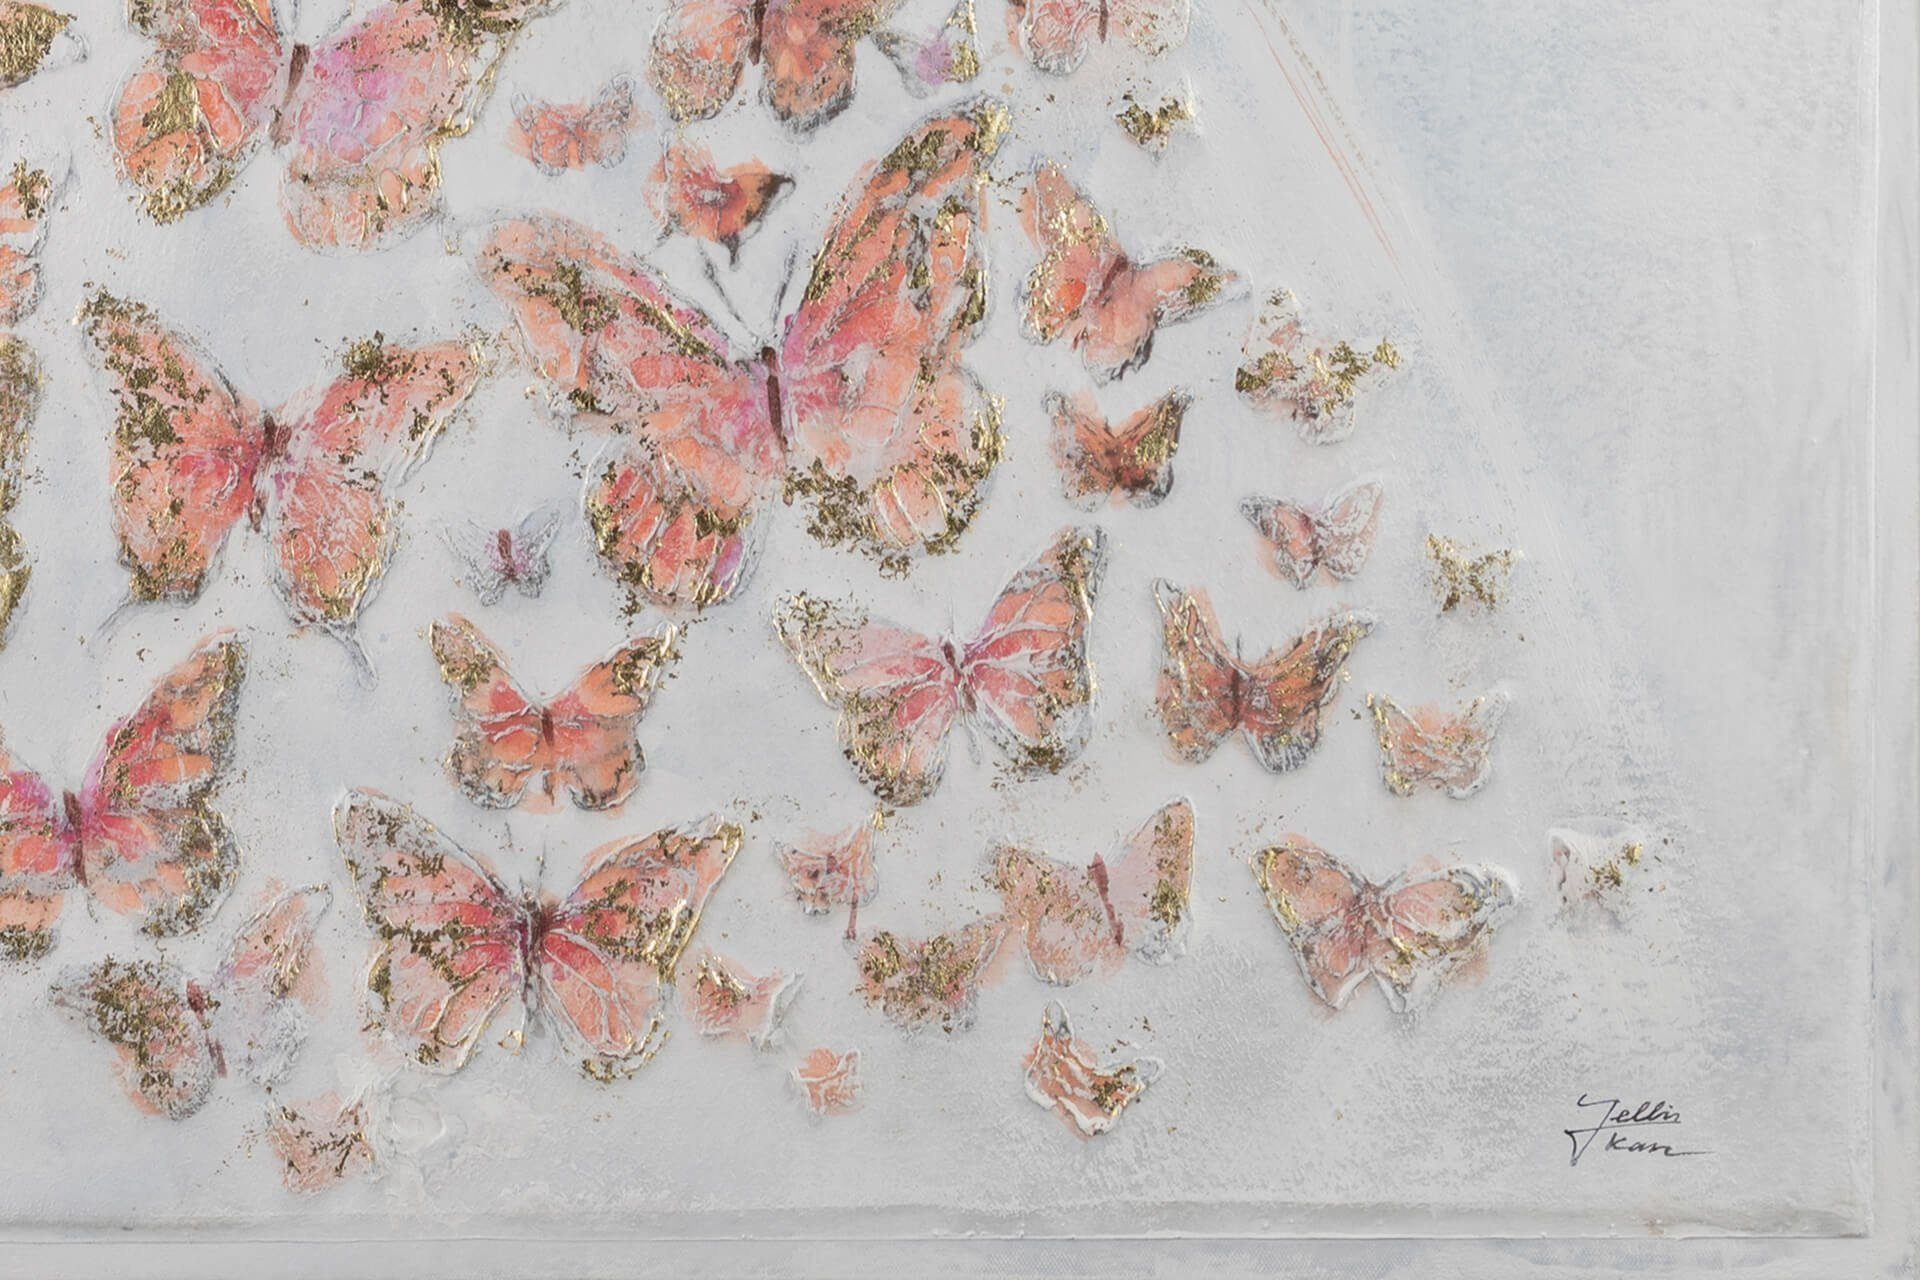 cm, 100% Leinwandbild Schmetterlingsball KUNSTLOFT HANDGEMALT Gemälde Wandbild Wohnzimmer 80x80